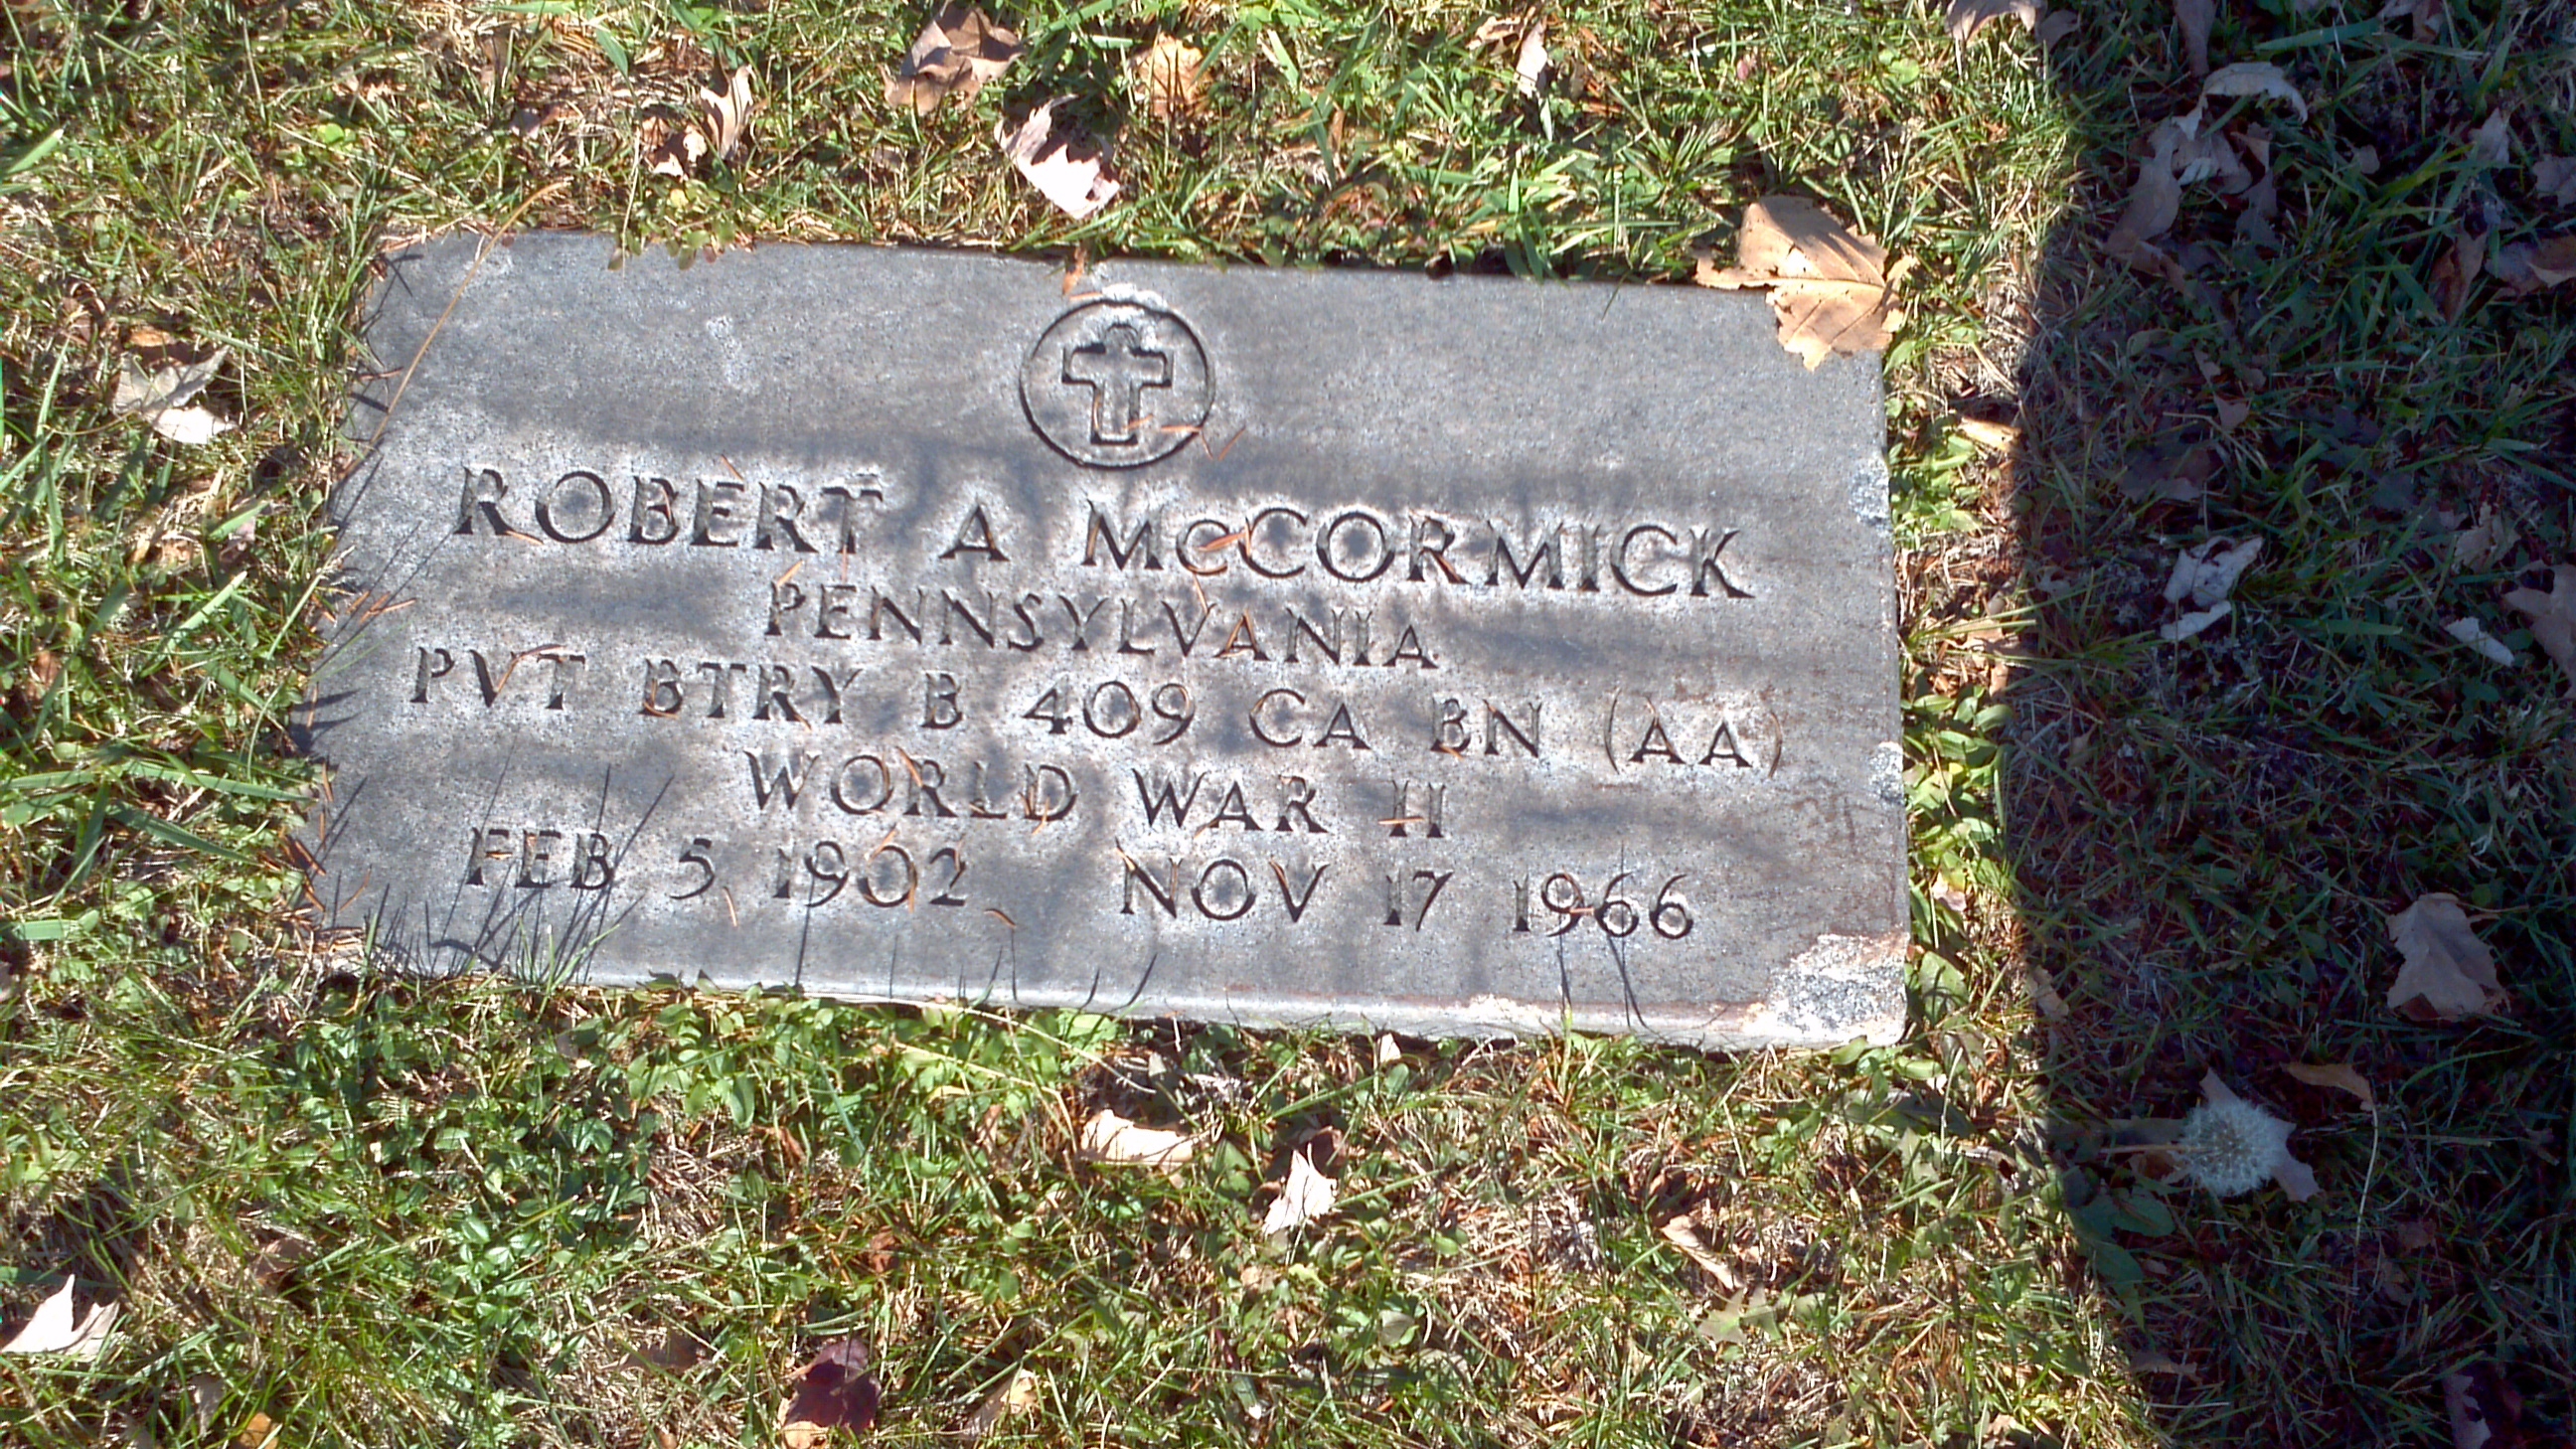 ROBERT A. MCCORMICK Headstone, Pennsylvania